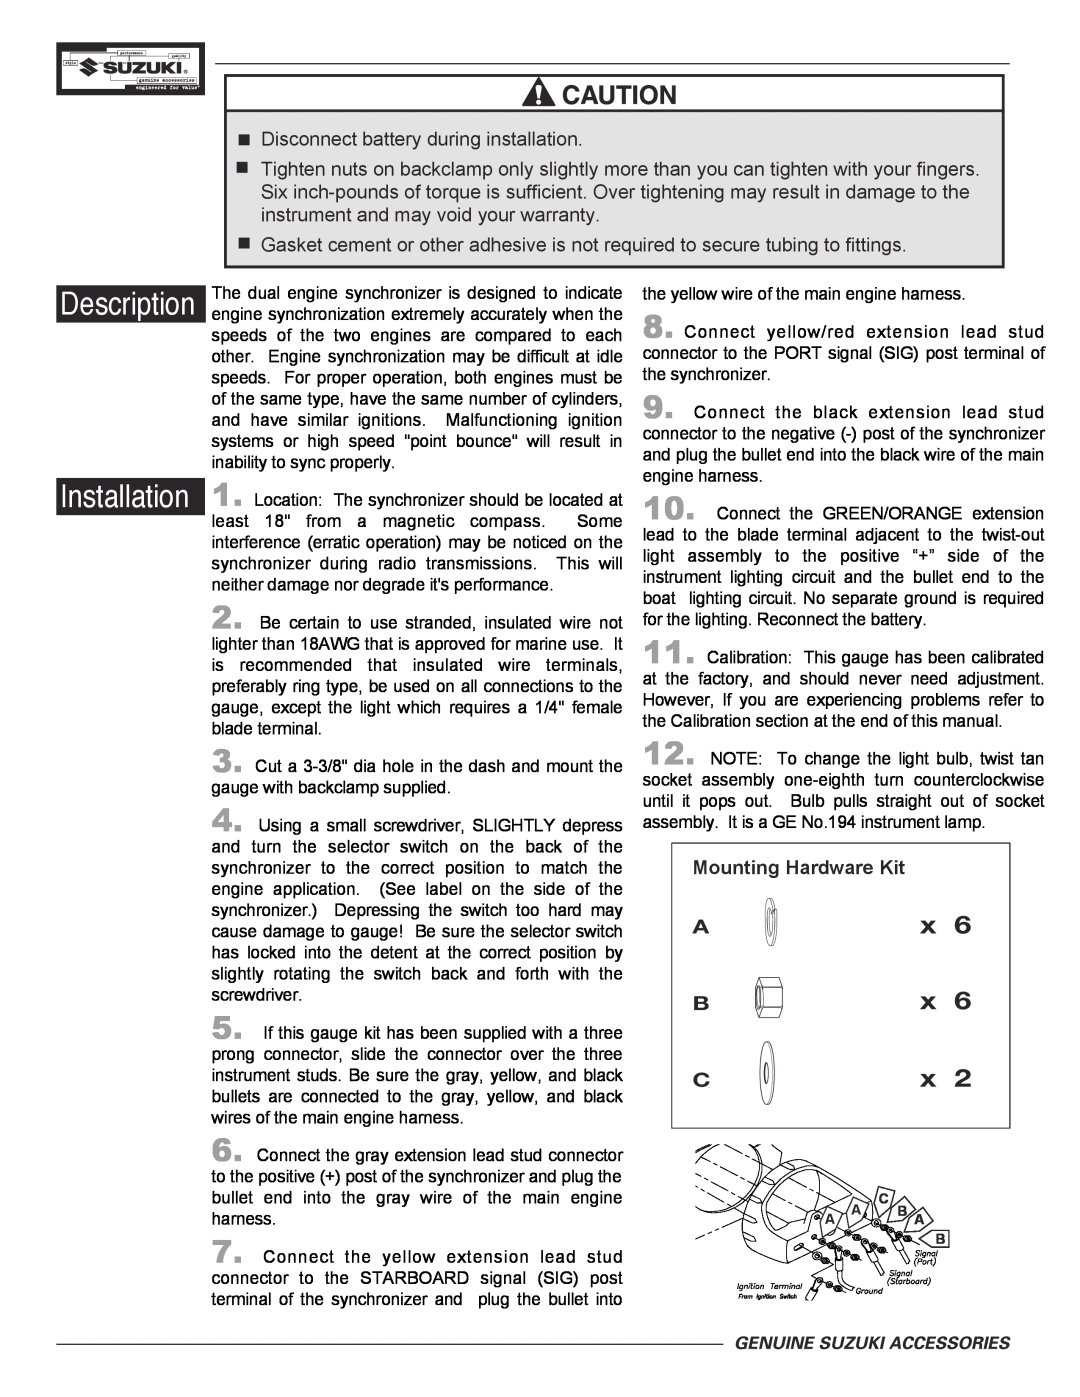 Suzuki 990C0-86B40, 86W41 manual Installation, Description, Mounting Hardware Kit 